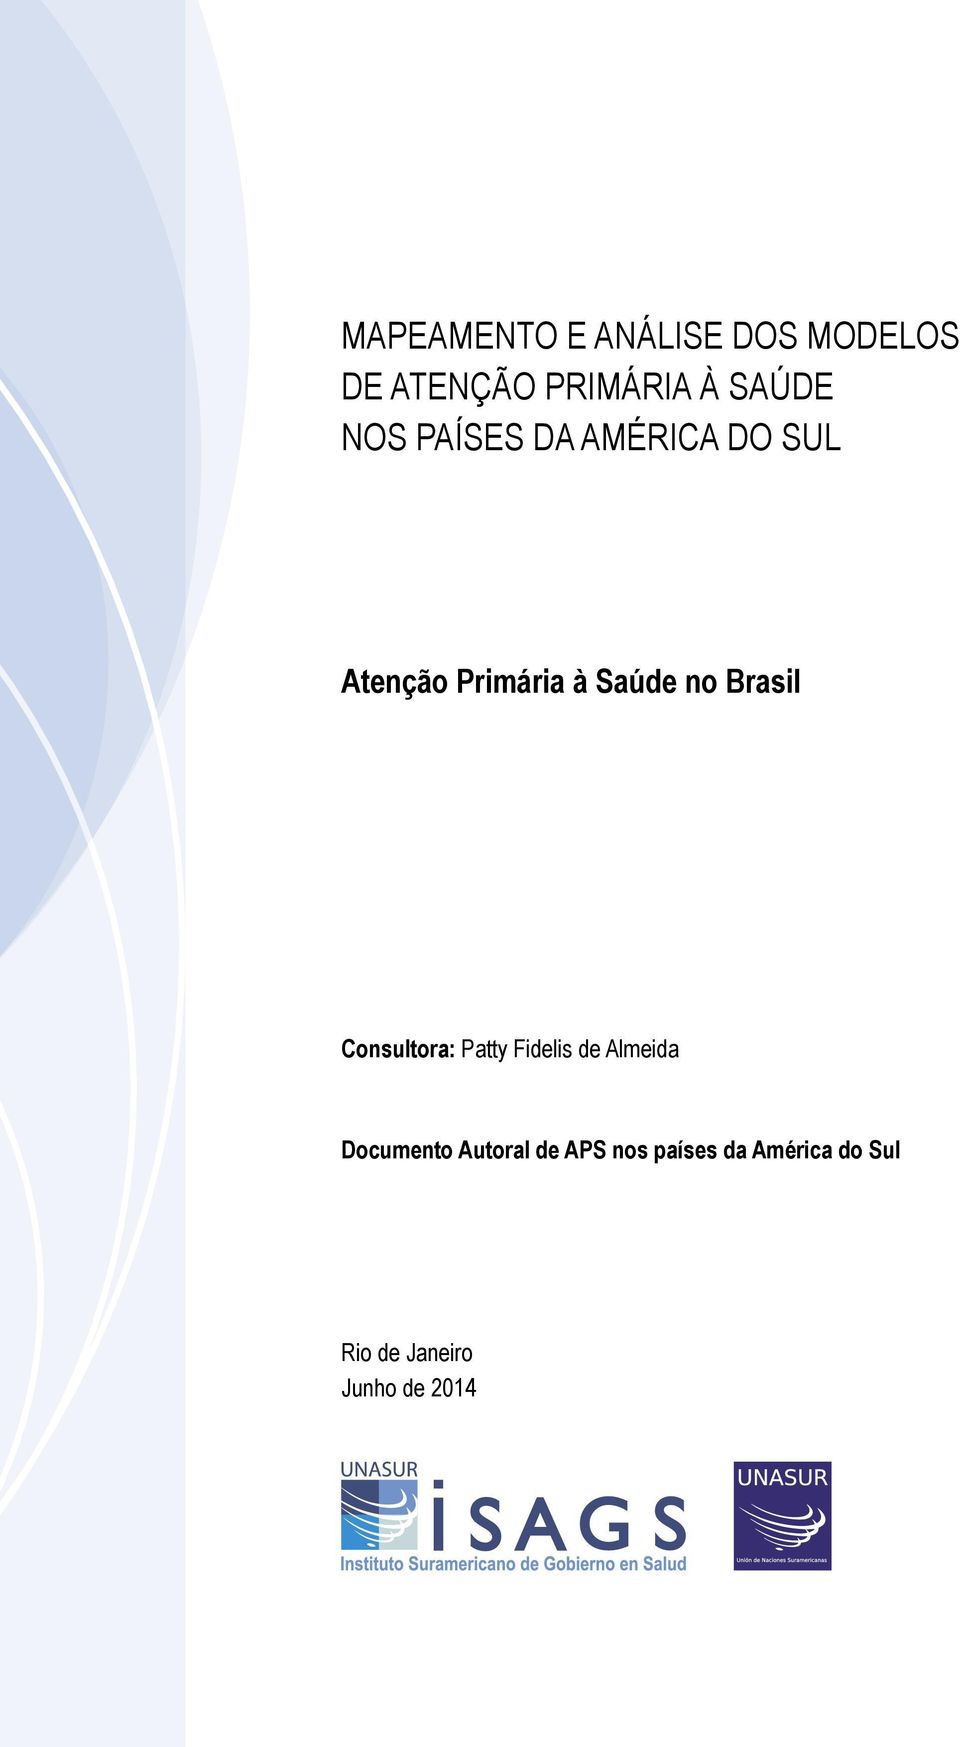 Brasil Consultora: Patty Fidelis de Almeida Documento